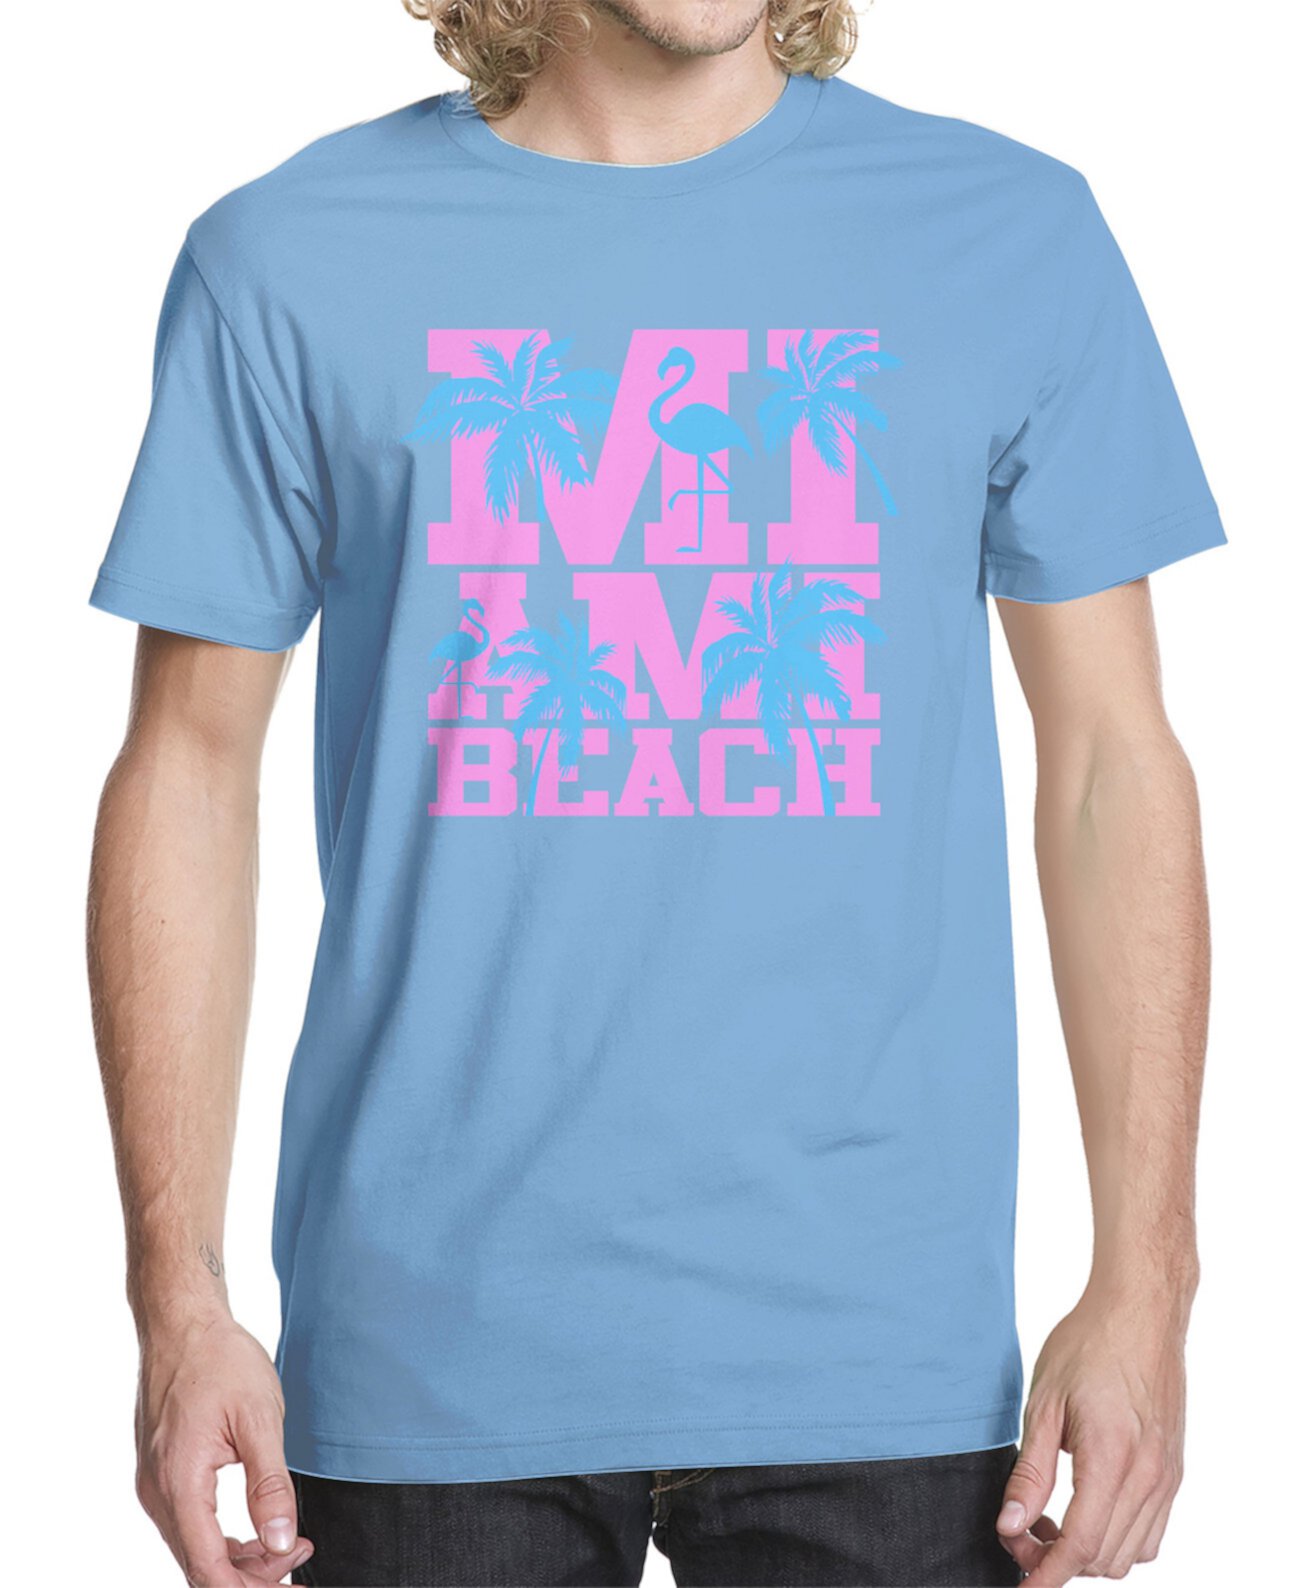 Мужская футболка с рисунком Майами-Бич Beachwood